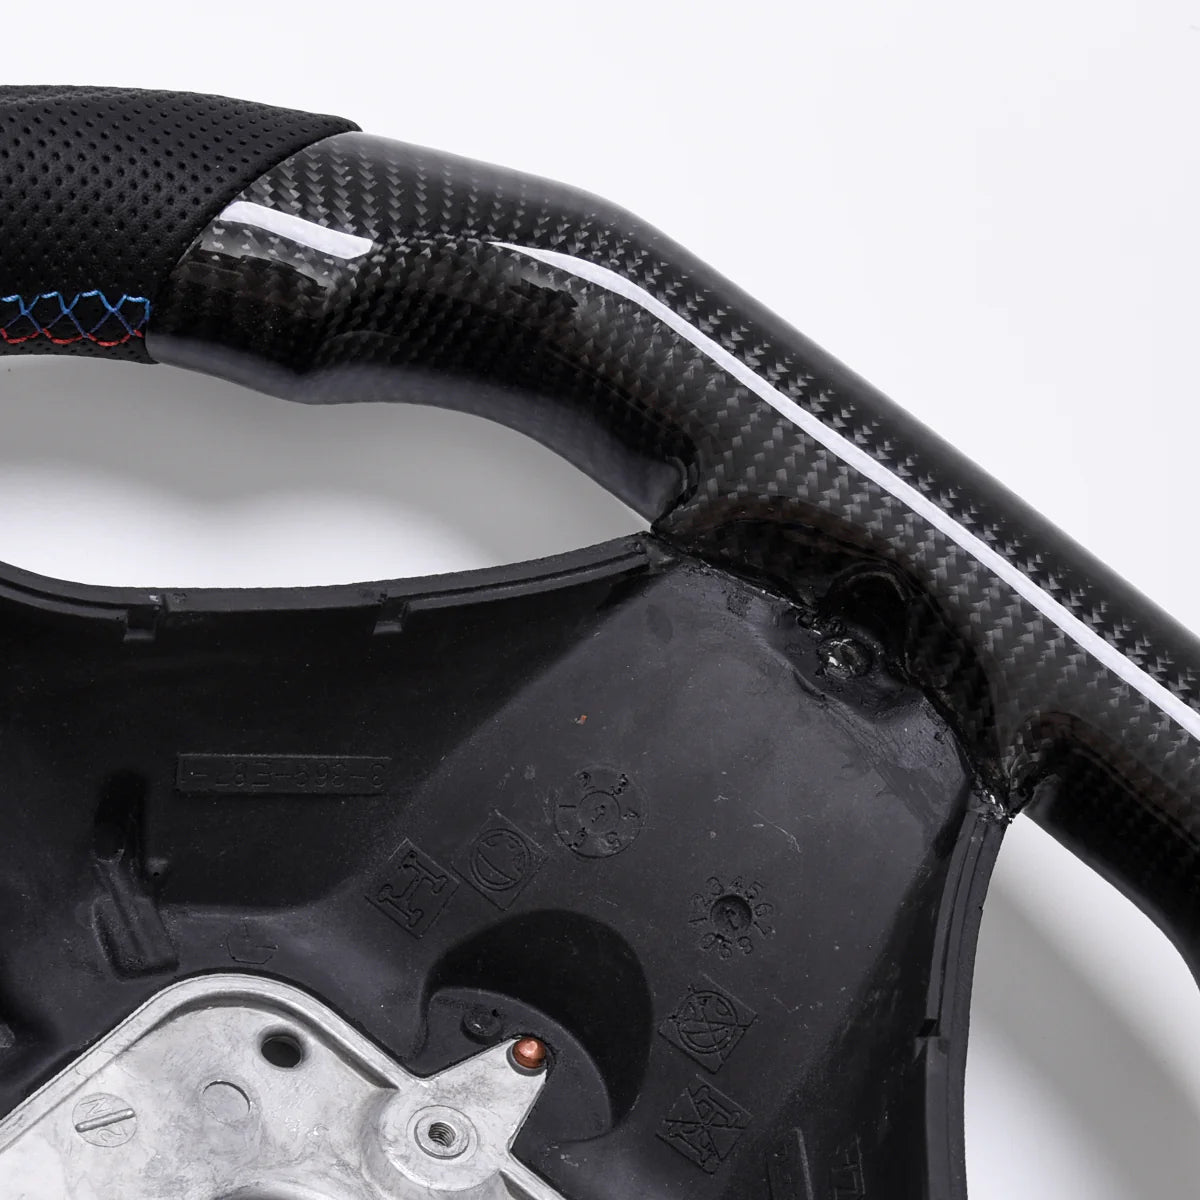 Carbon Fiber Steering Wheel for BMW E82 E90 E92